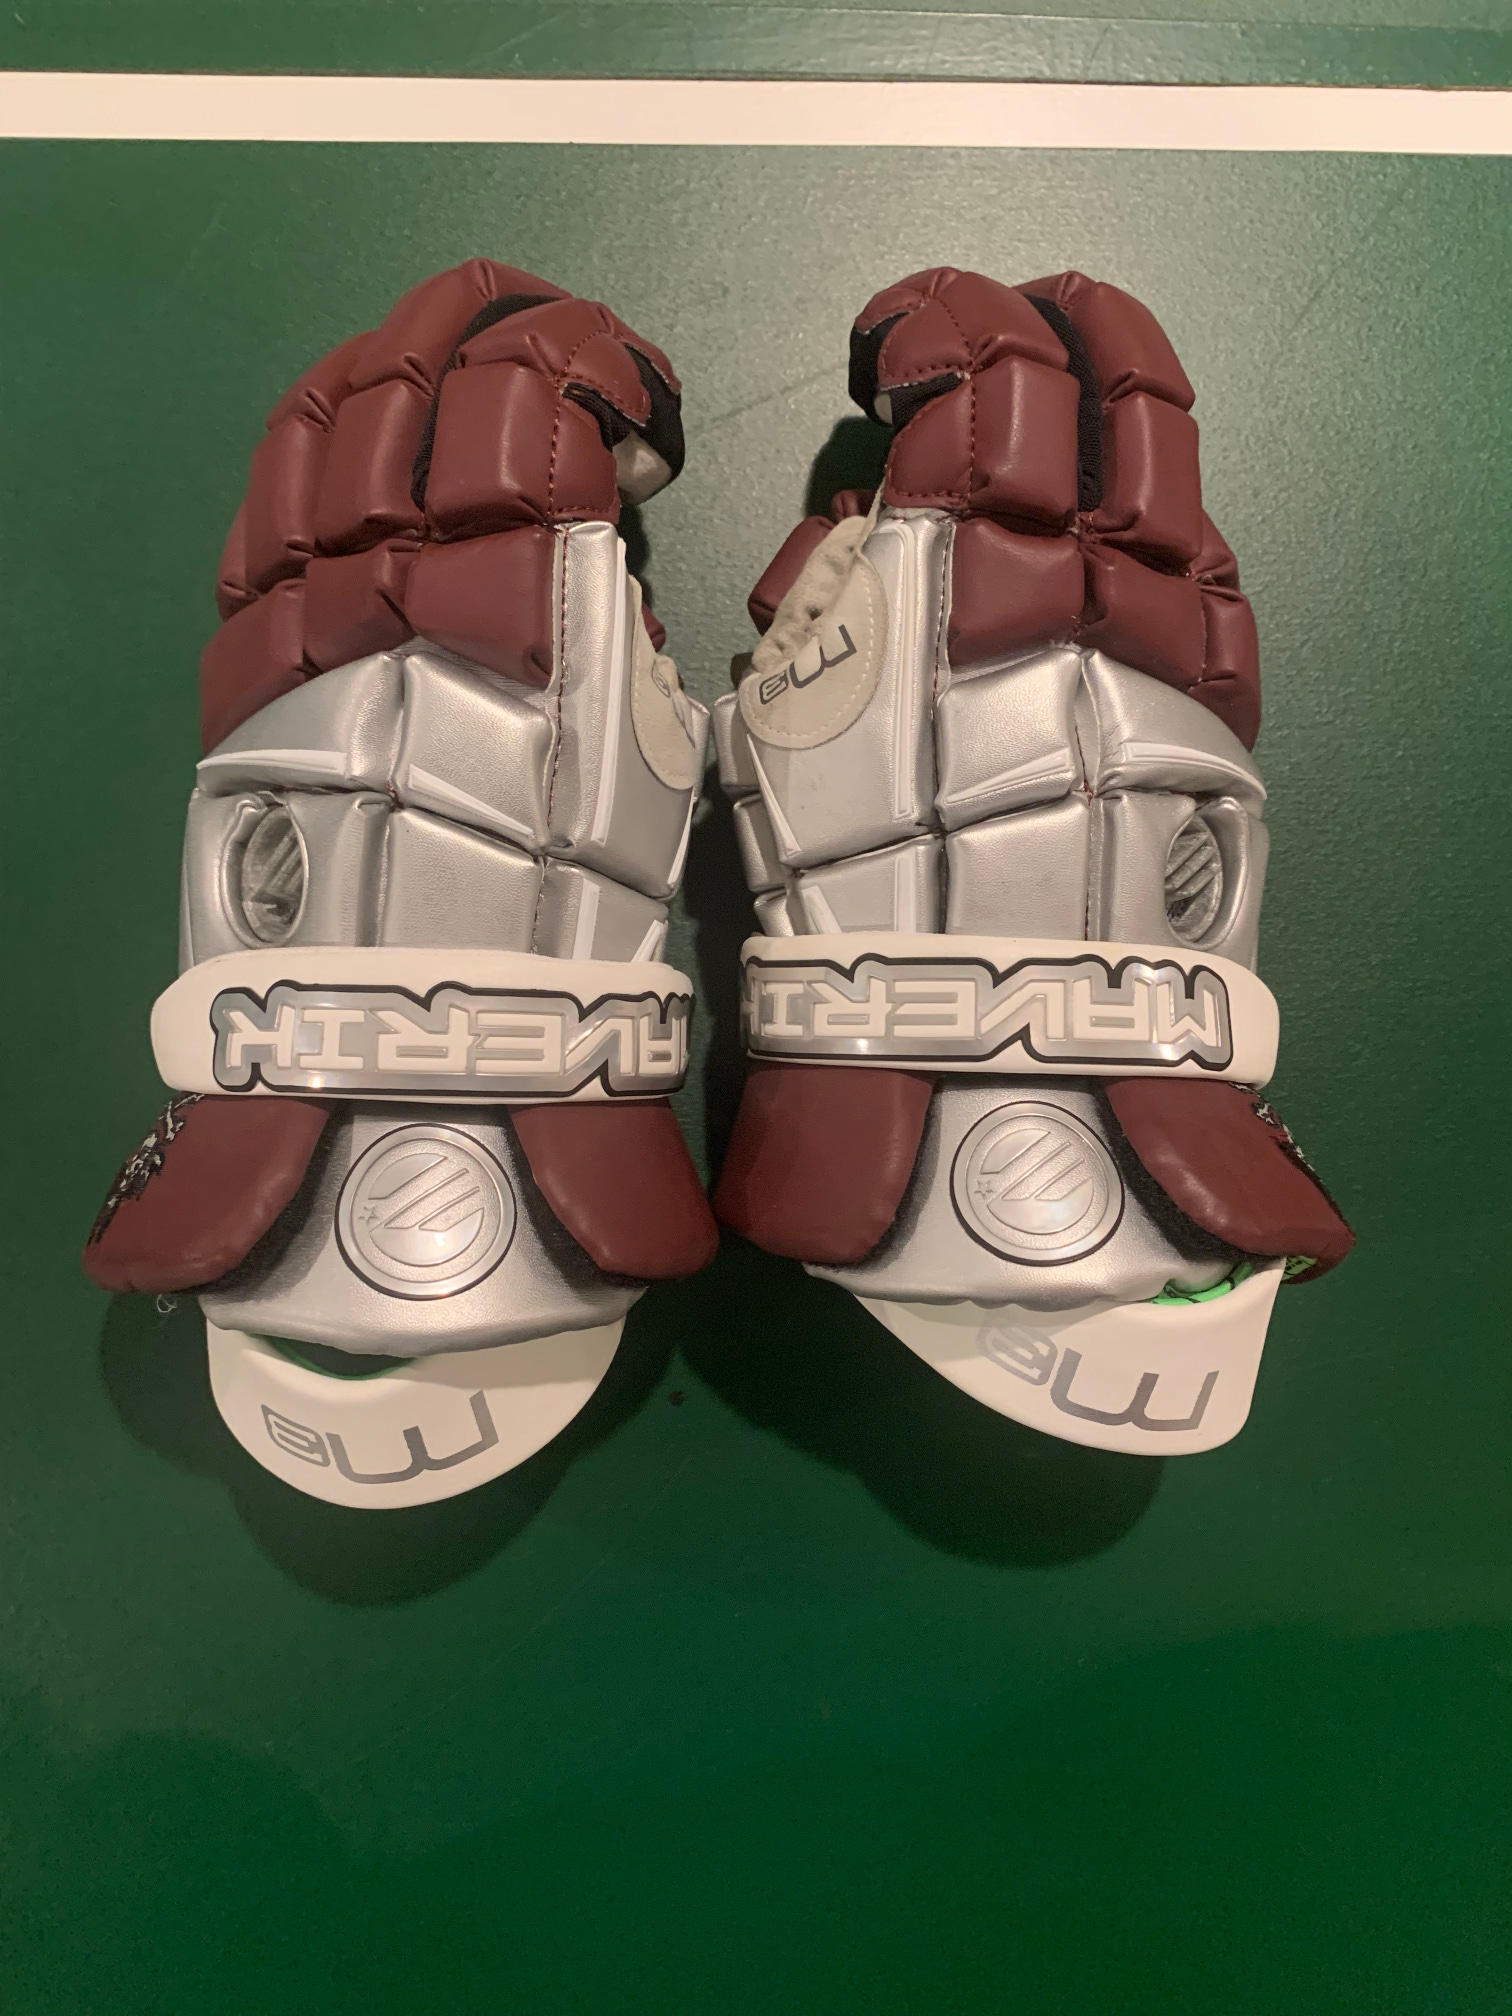 New Player's Maverik M3 Lacrosse Gloves 13"